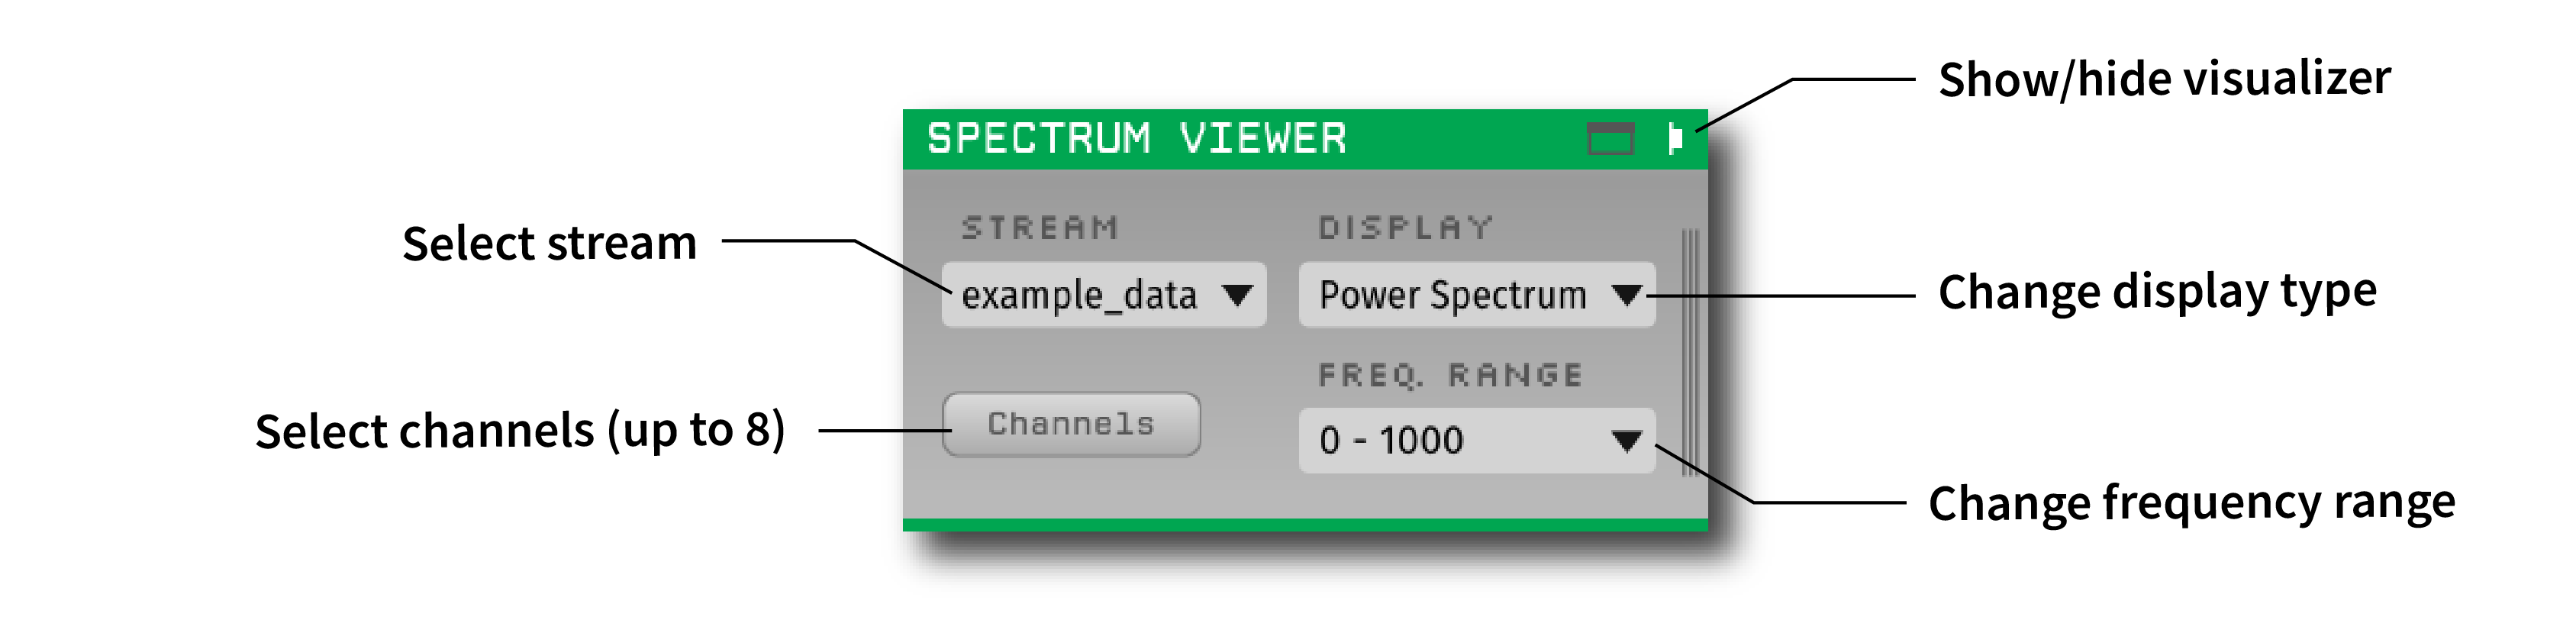 Annotated Spectrum Viewer Editor